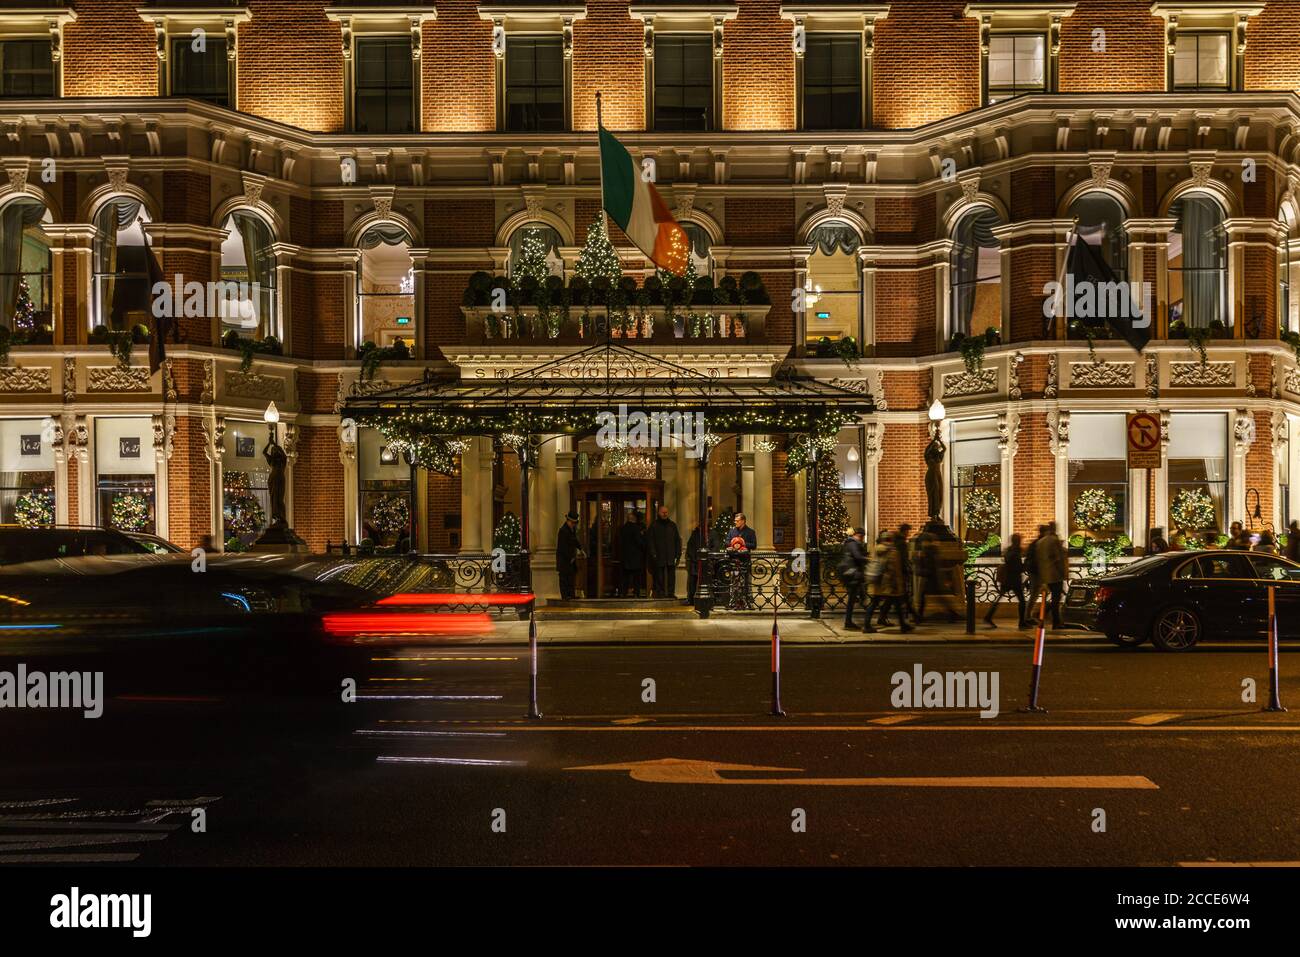 Dublín, Irlanda - 7 de diciembre de 2017: Hotel de cinco estrellas The Shelbourne Dublin, UN hotel renacentista en St. Stephen's Green, Dublín, Irlanda Foto de stock